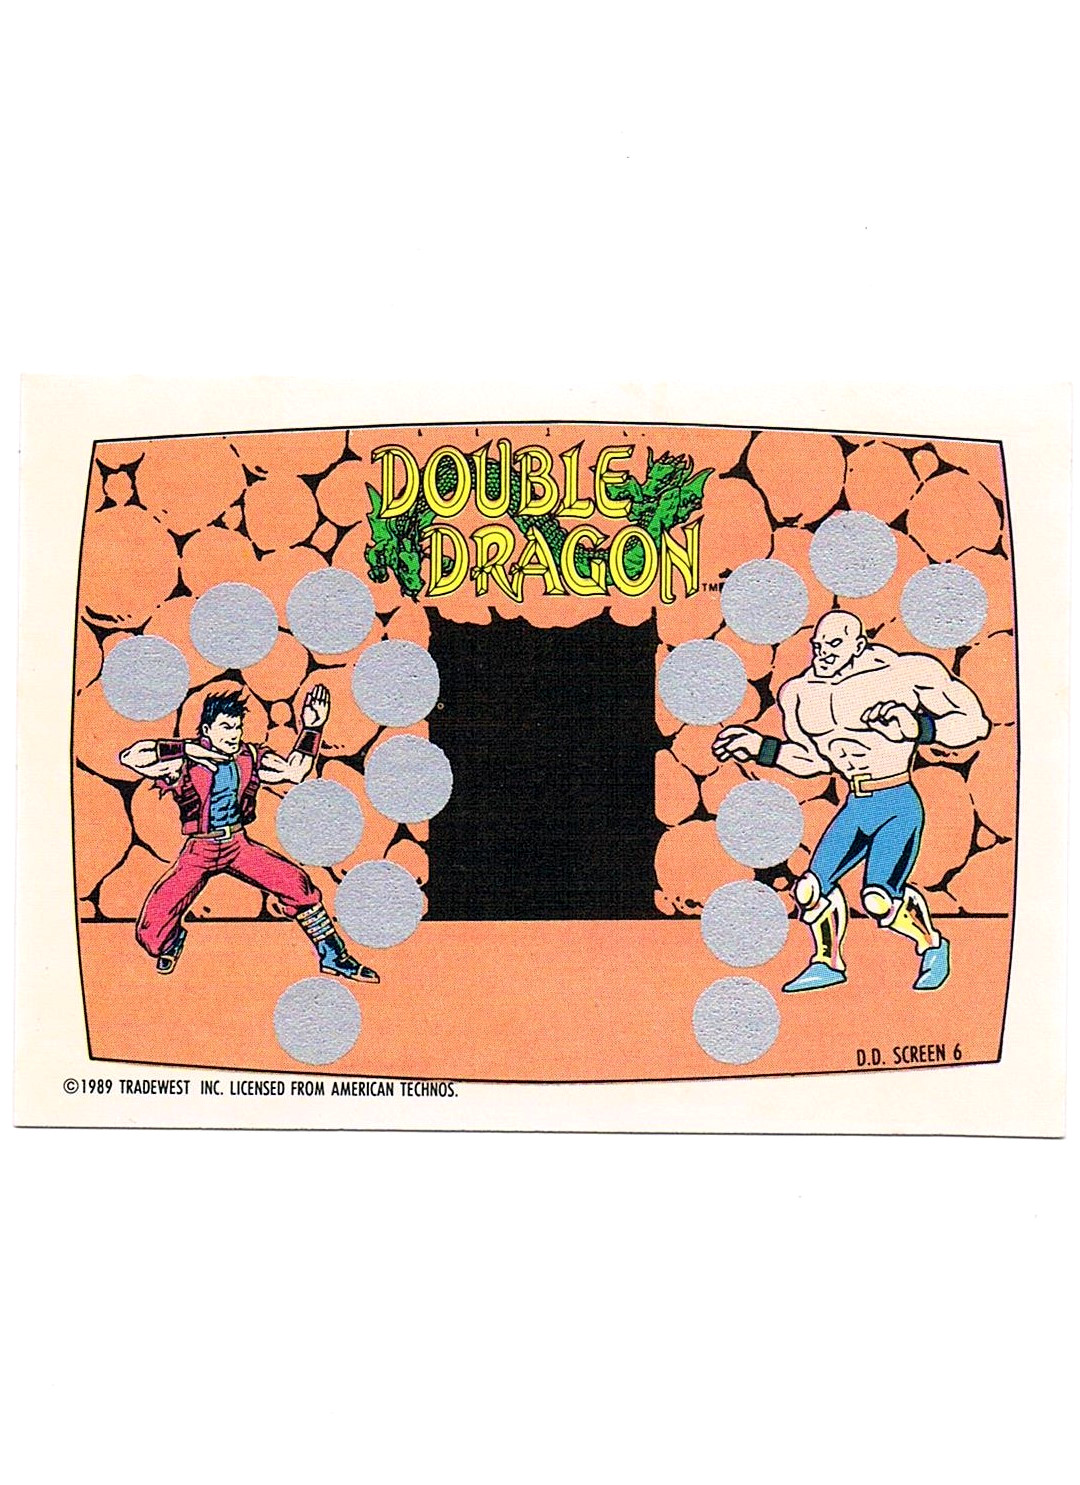 Double Dragon - NES Rubbelkarte - Screen 6 Topps / Nintendo 1989